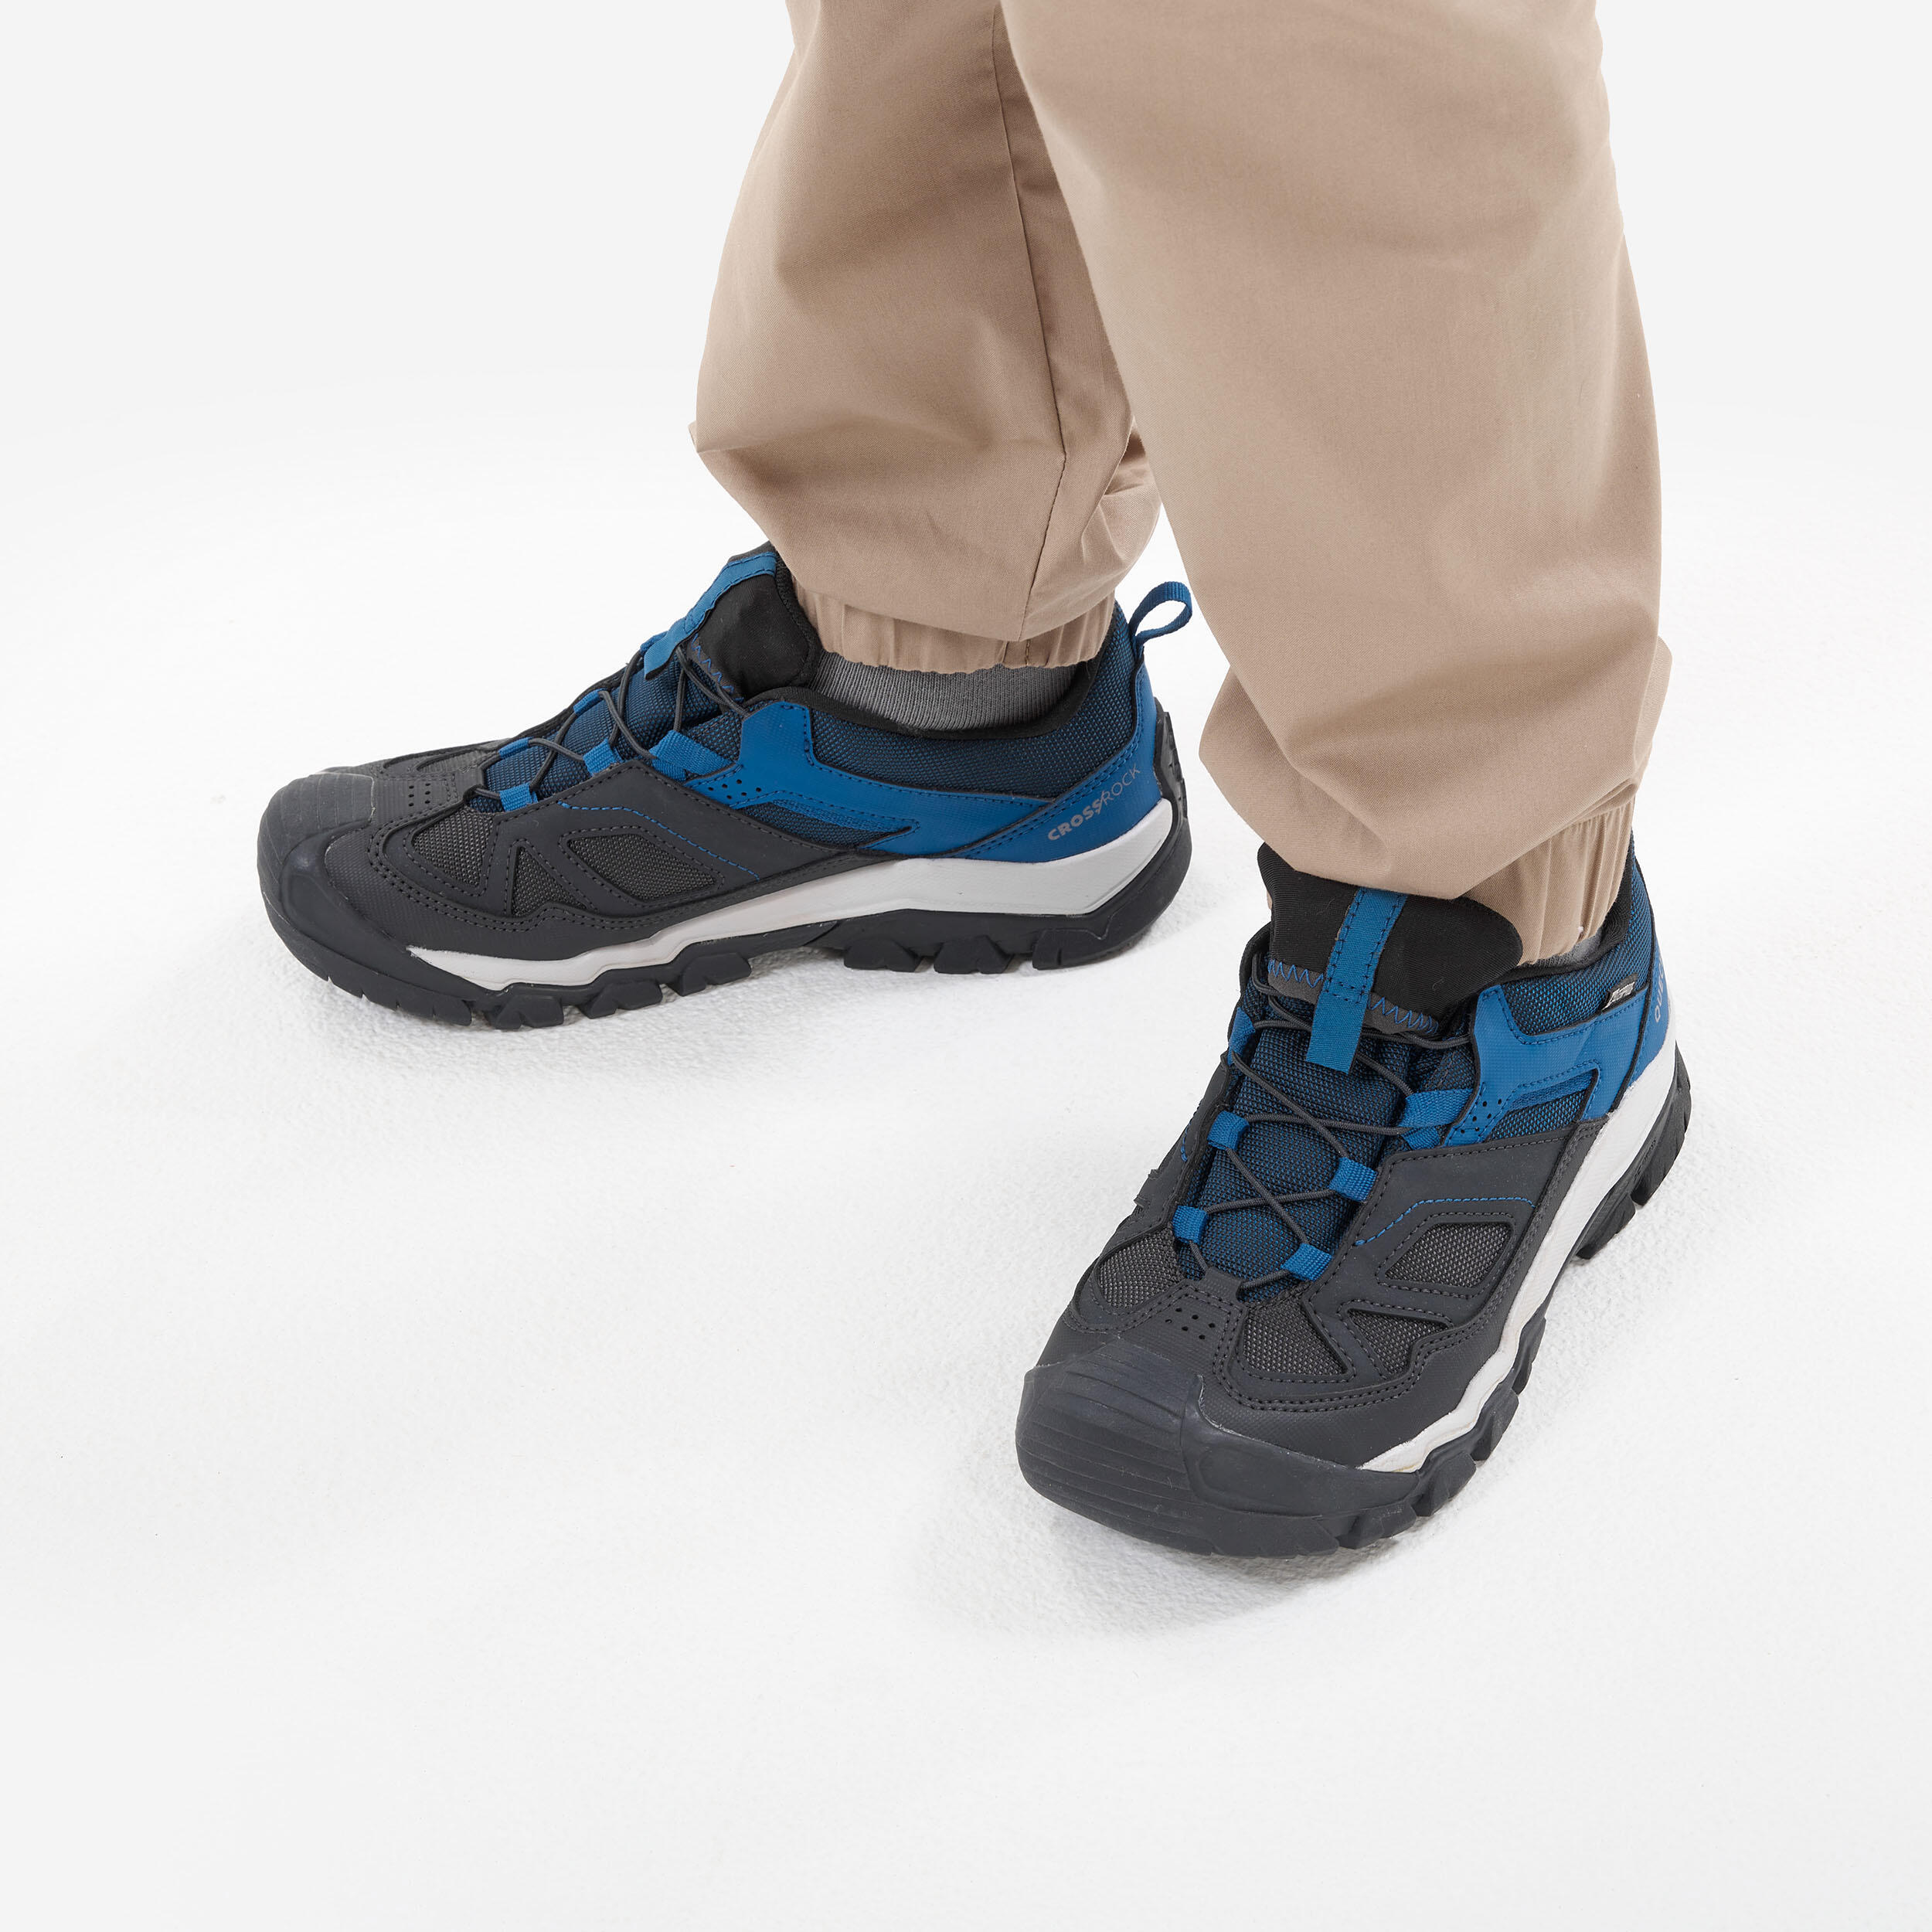 Kids’ Waterproof Lace-up Hiking Shoes - CROSSROCK UK size 2.5 - 5 - Blue 6/10